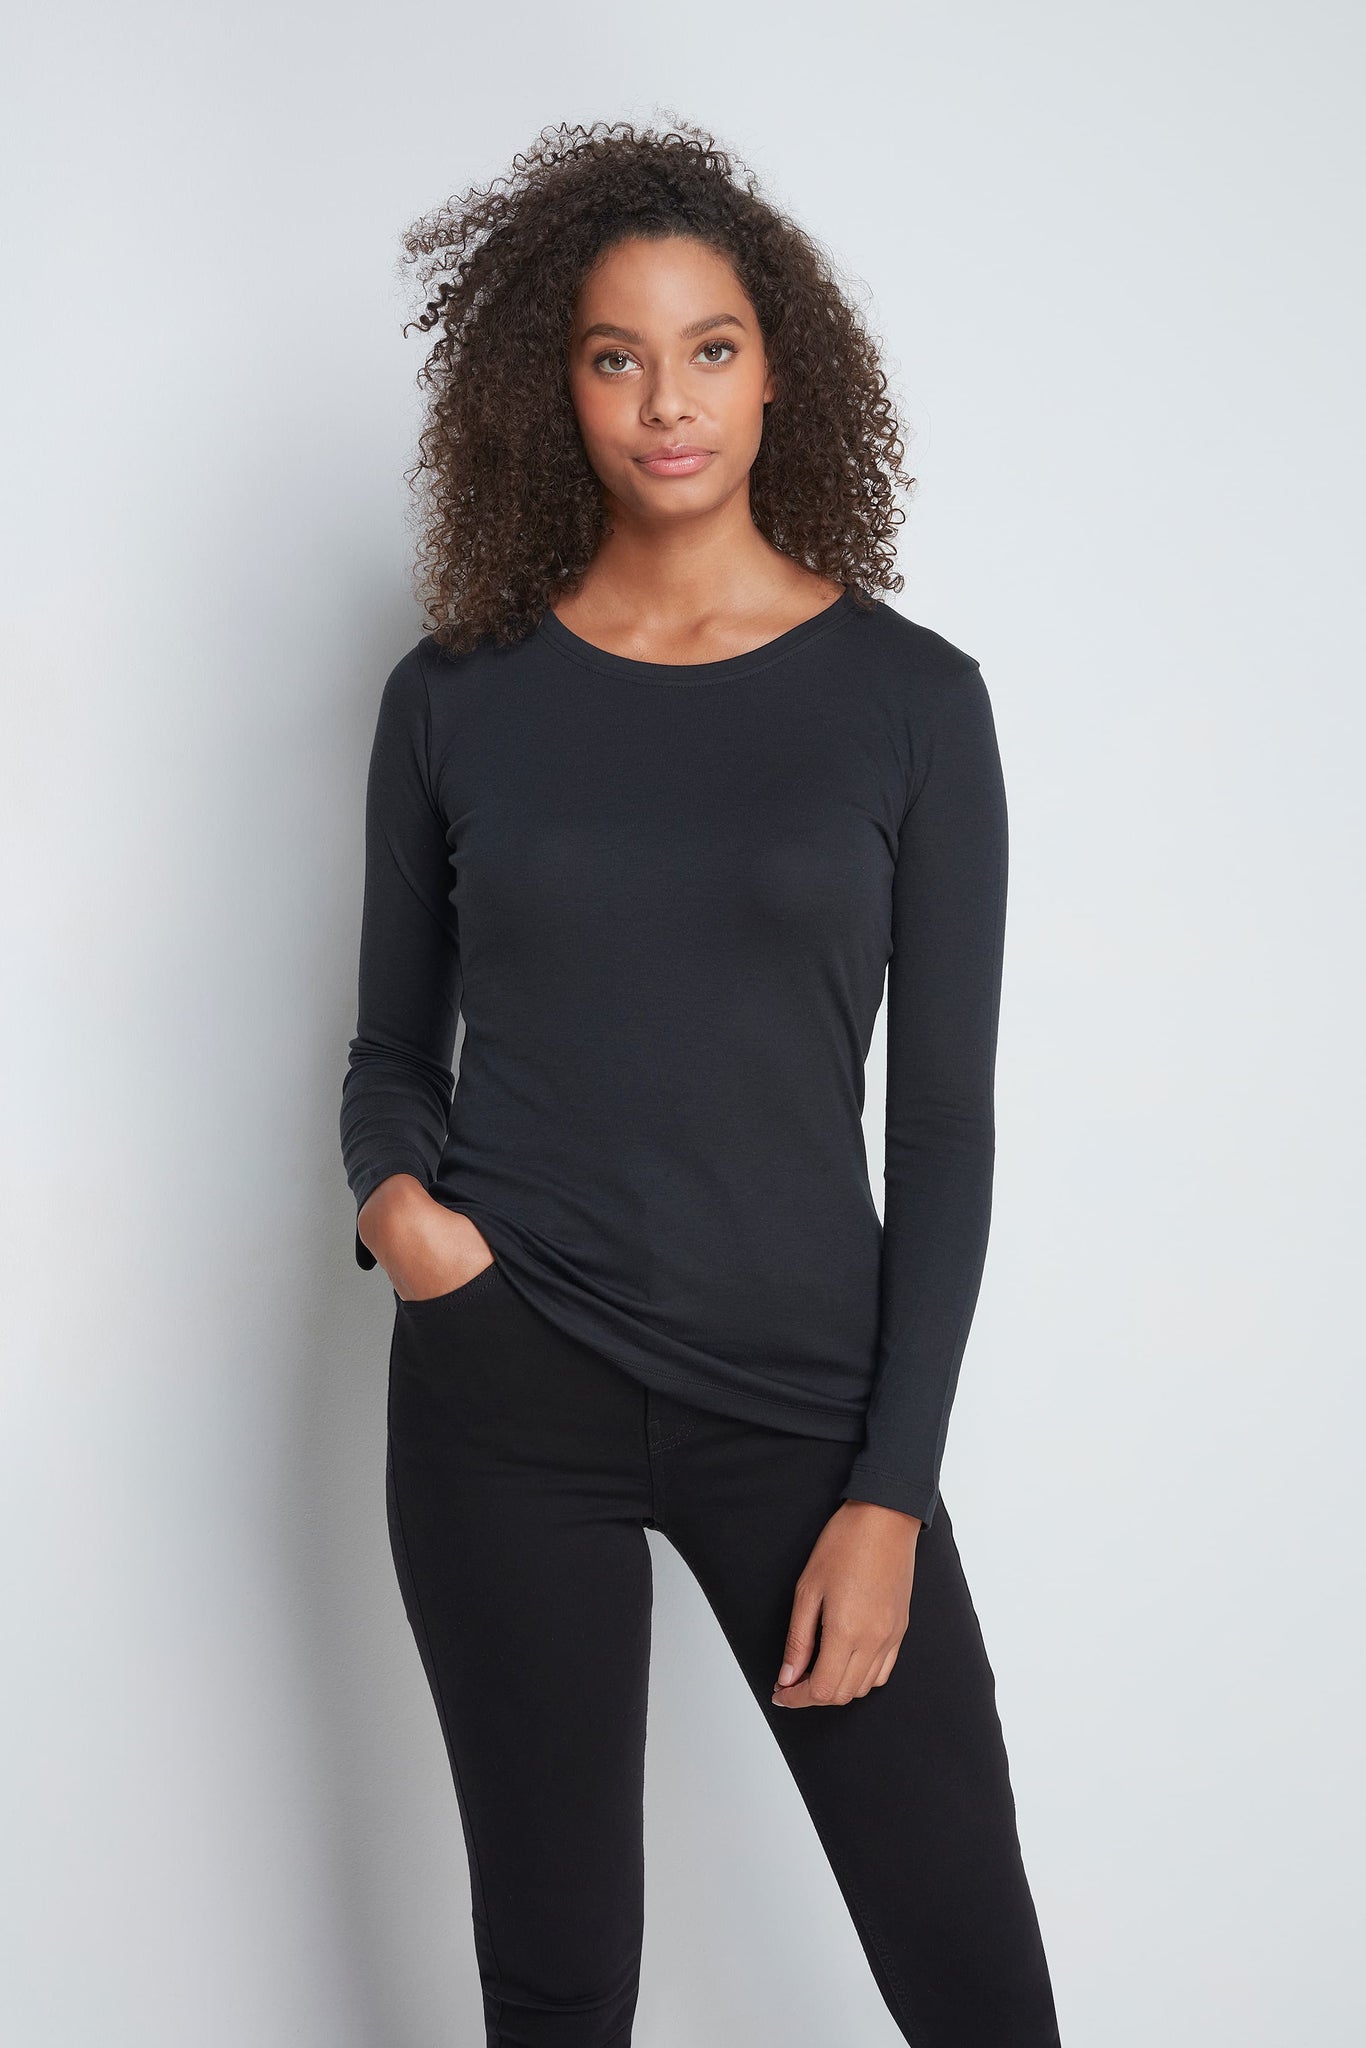 Women's black long sleeve crew neck t-shirt made from a soft cotton modal blend fabric